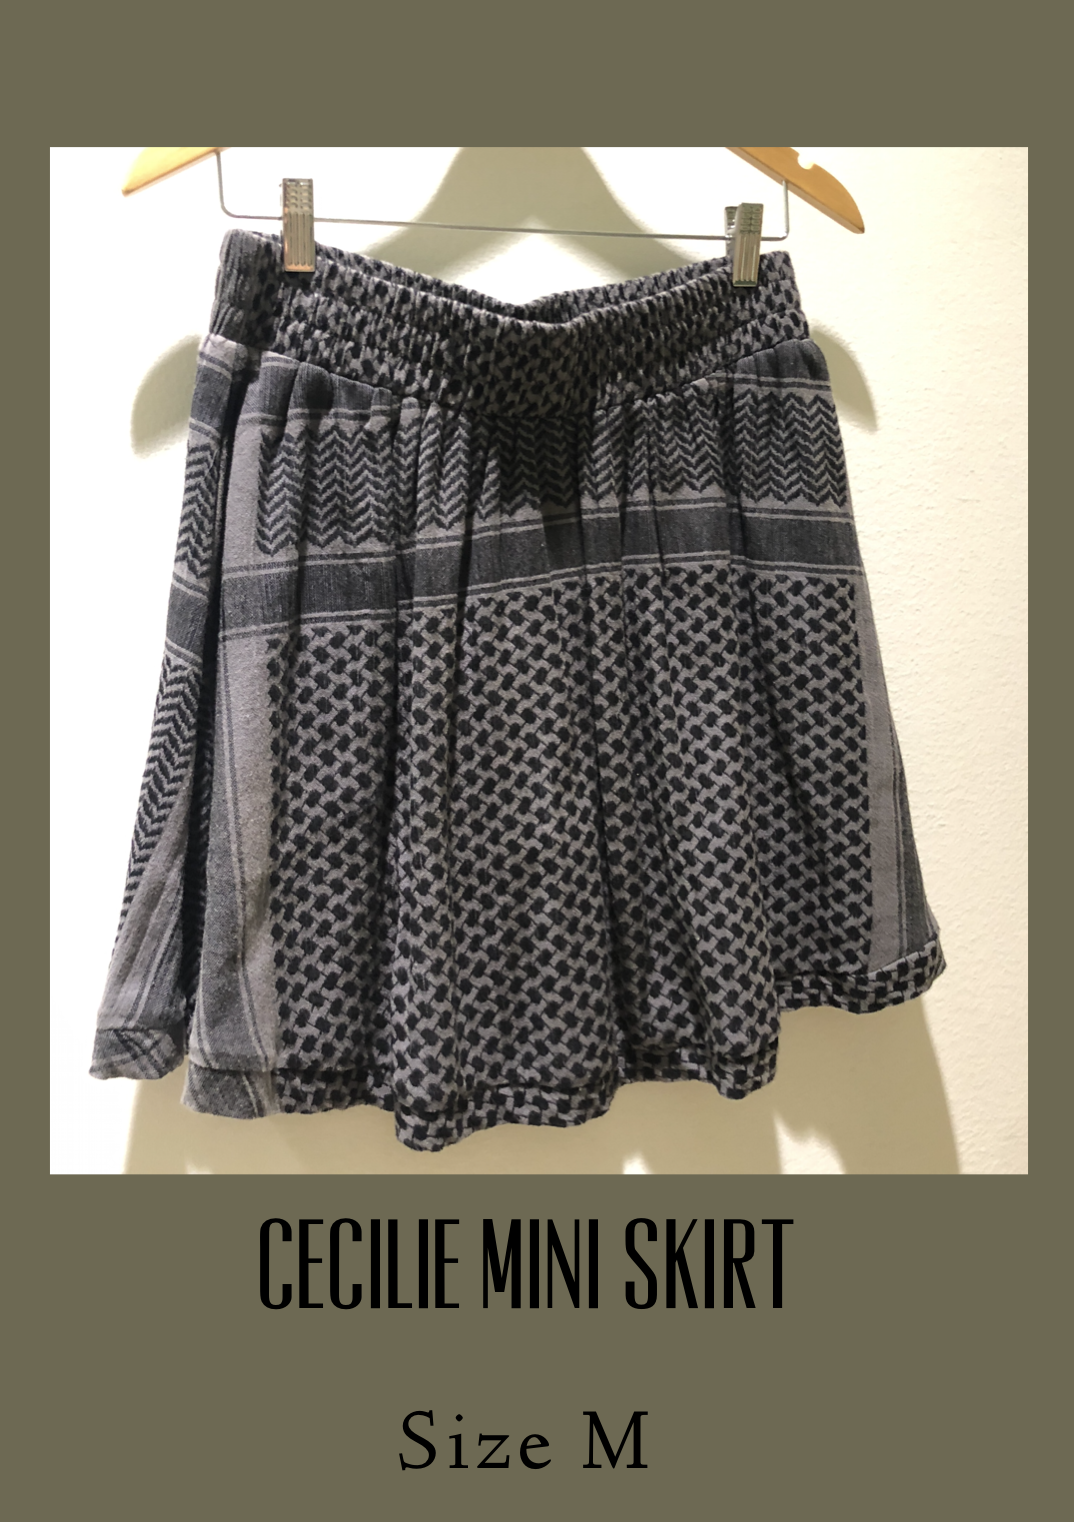 Cotton Skirt with Pockets -Medium - Milou Palm Beach